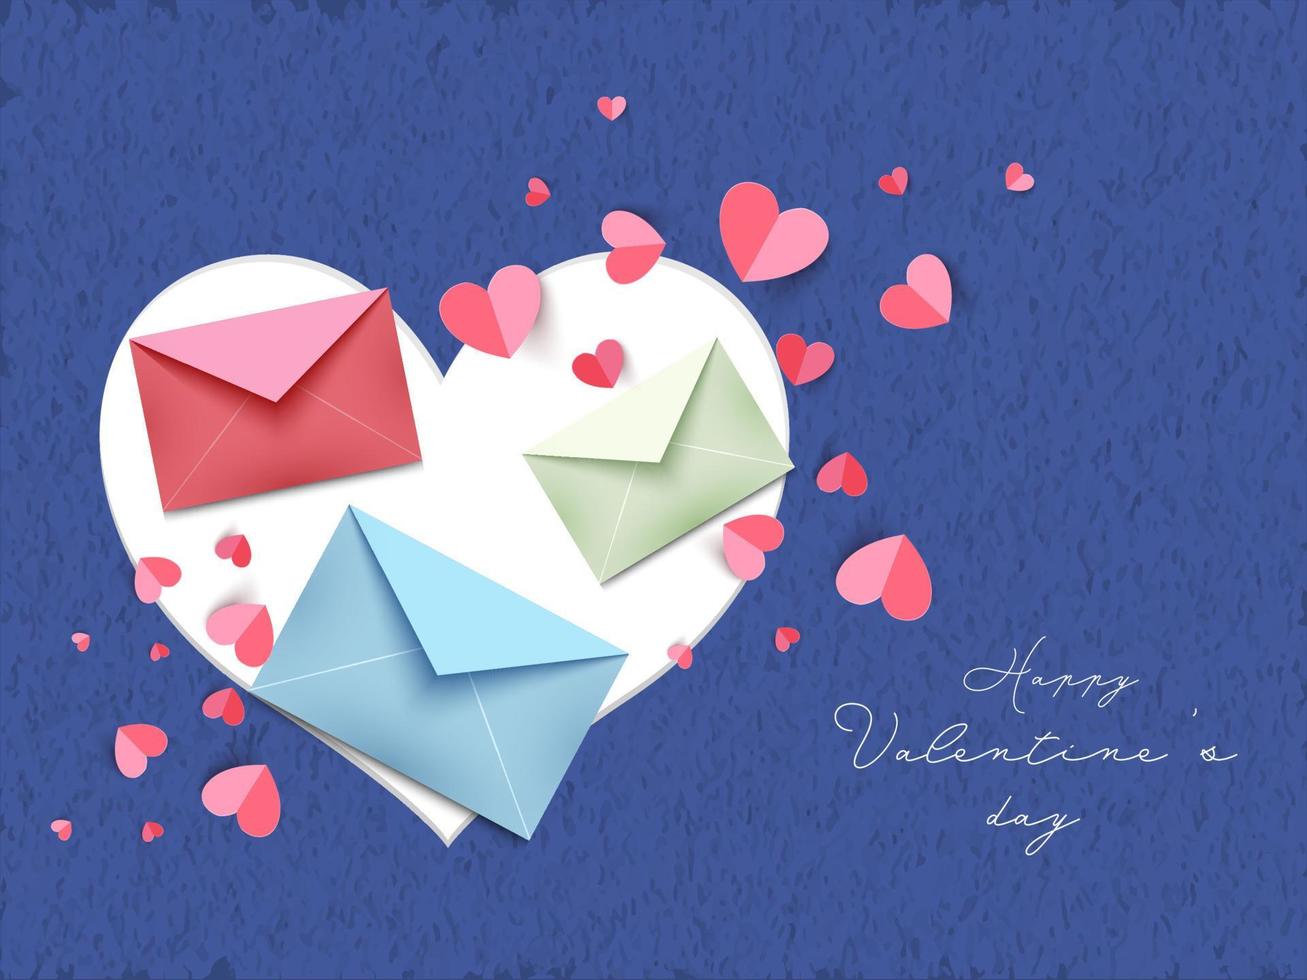 diferente color sobre con papel corazones decorado en azul hormigón textura antecedentes para contento San Valentín día. vector